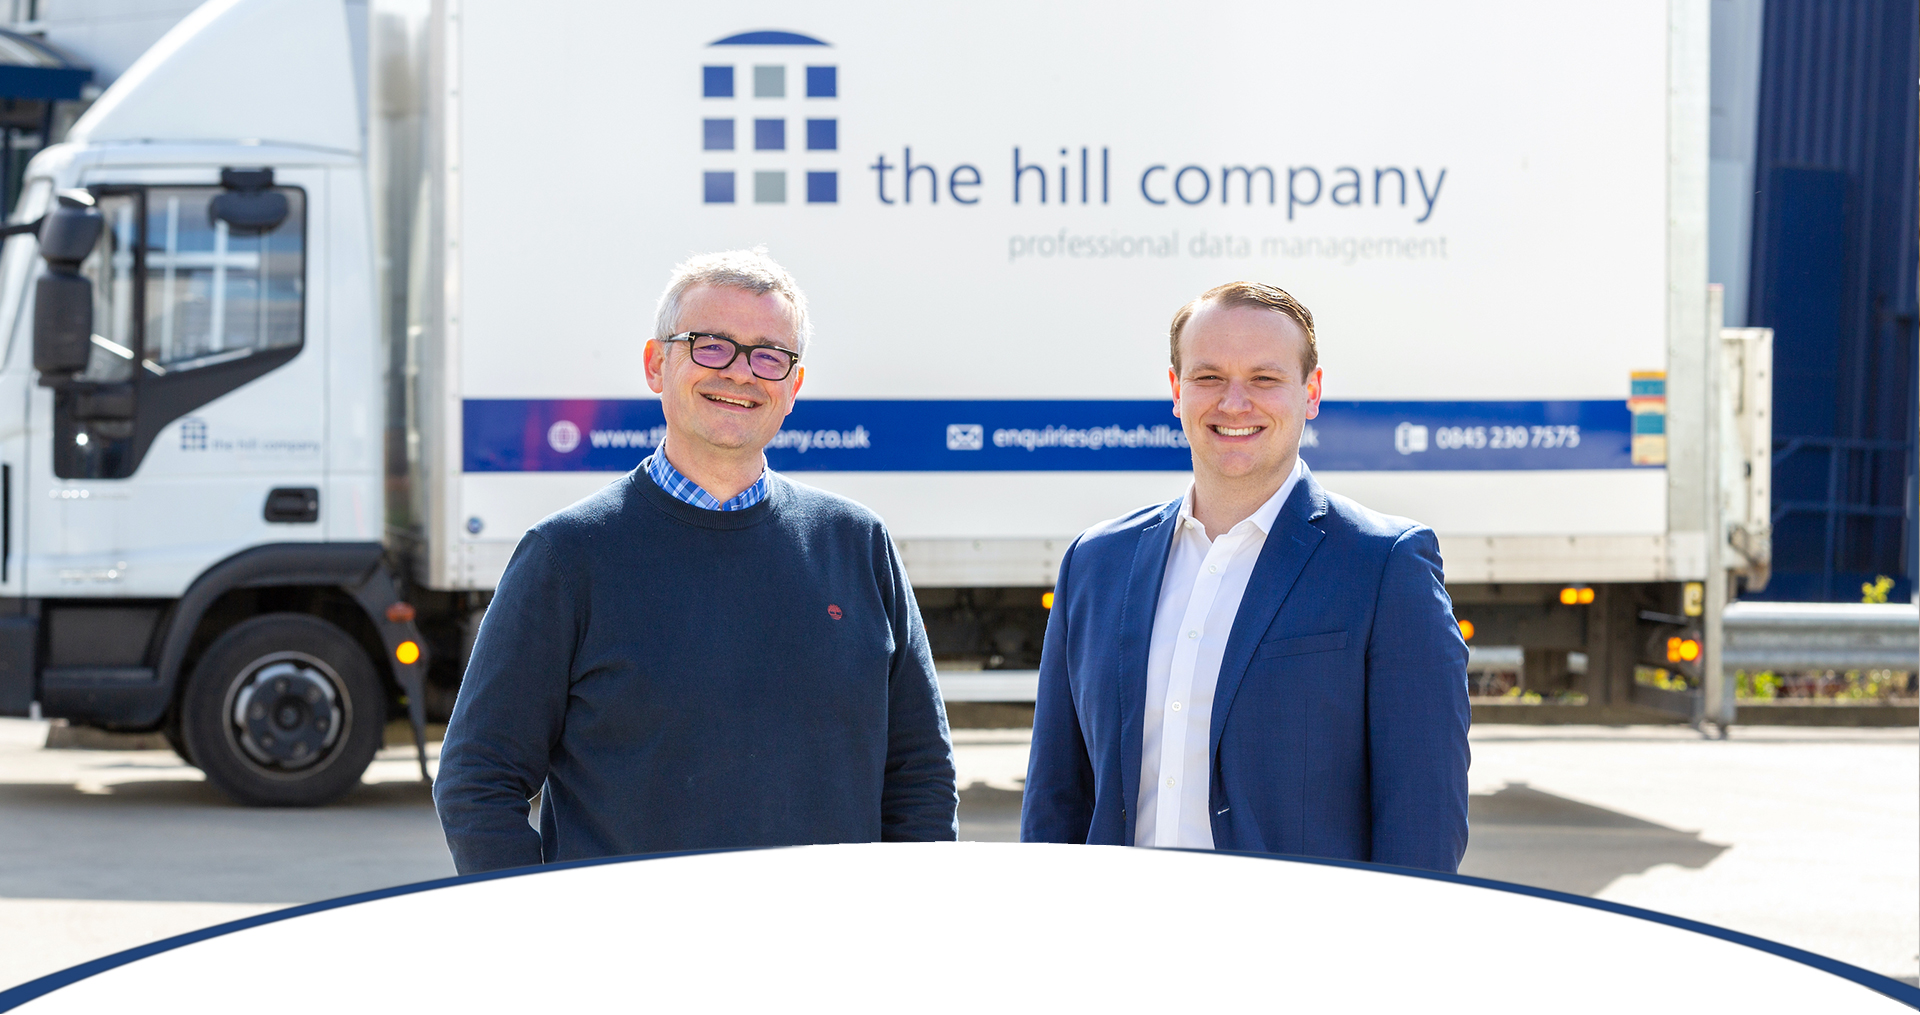 Company The Hill 